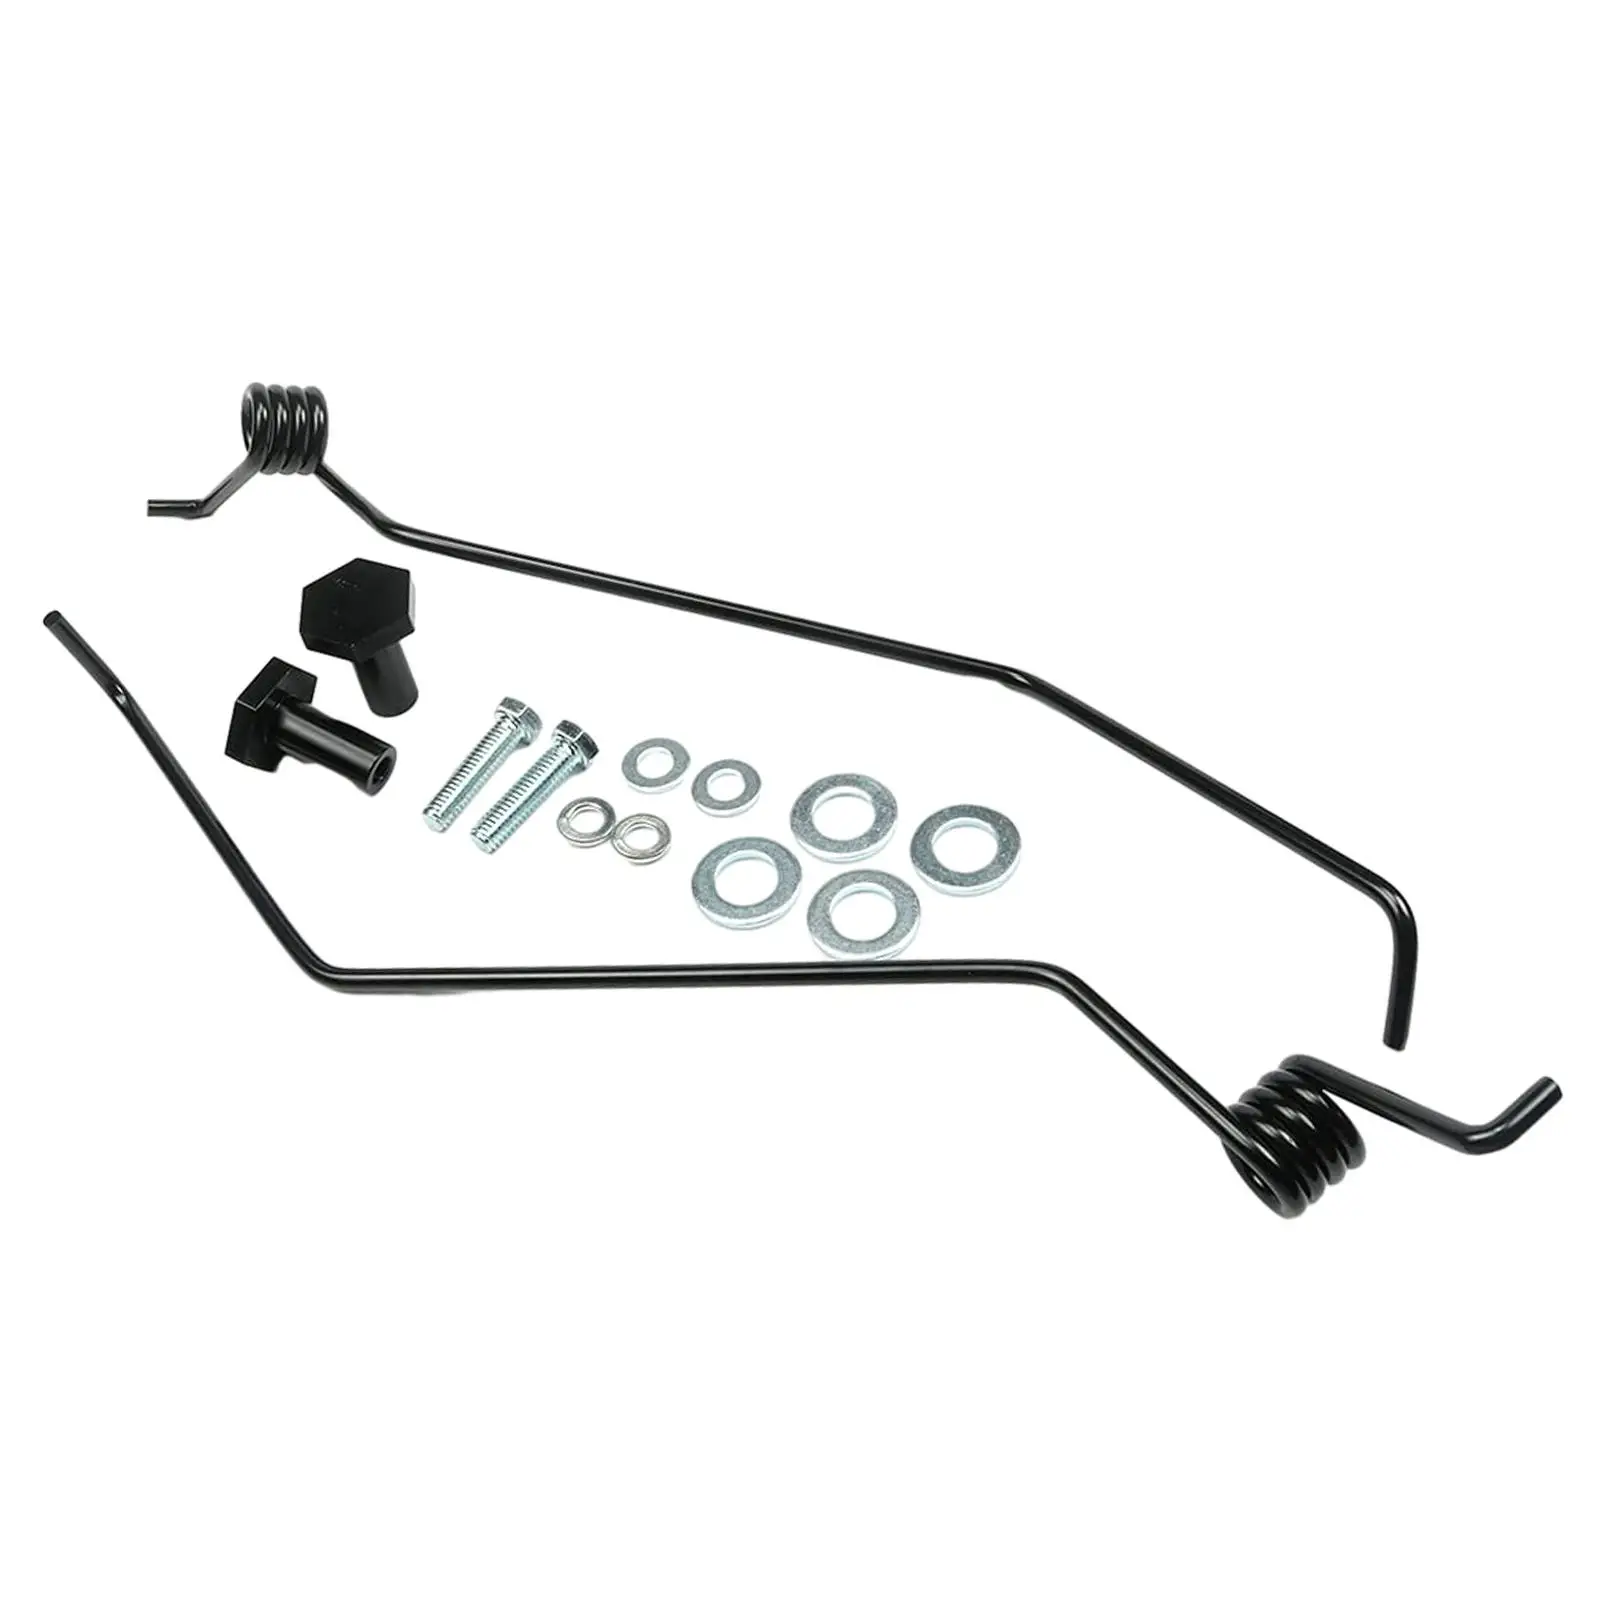 Snowmobile Ice Snow Scratchers Kit High Performance Premium Automotive Accessory 4E565768 for Vehicle Universal Spare Parts